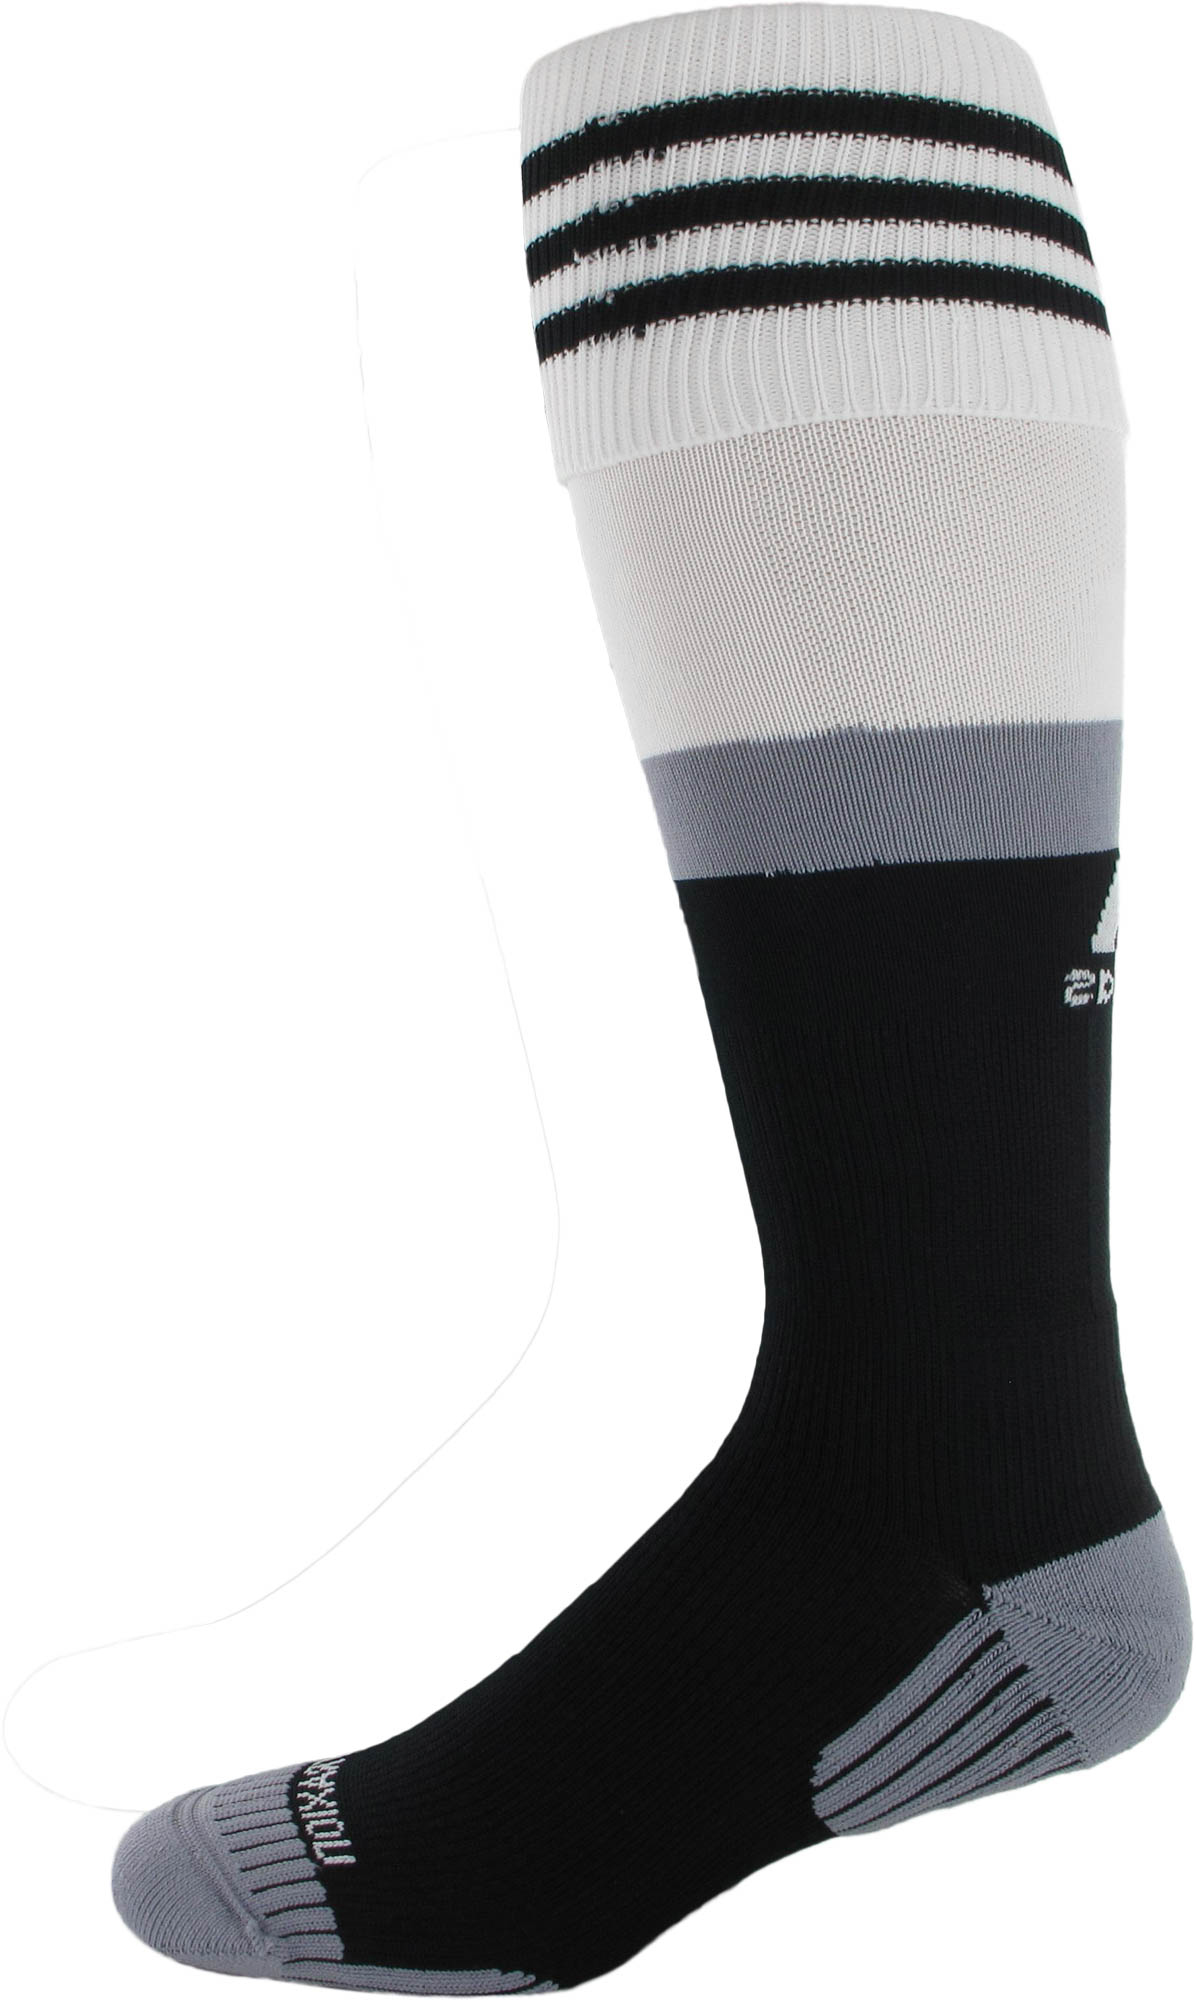 adidas traxion soccer socks